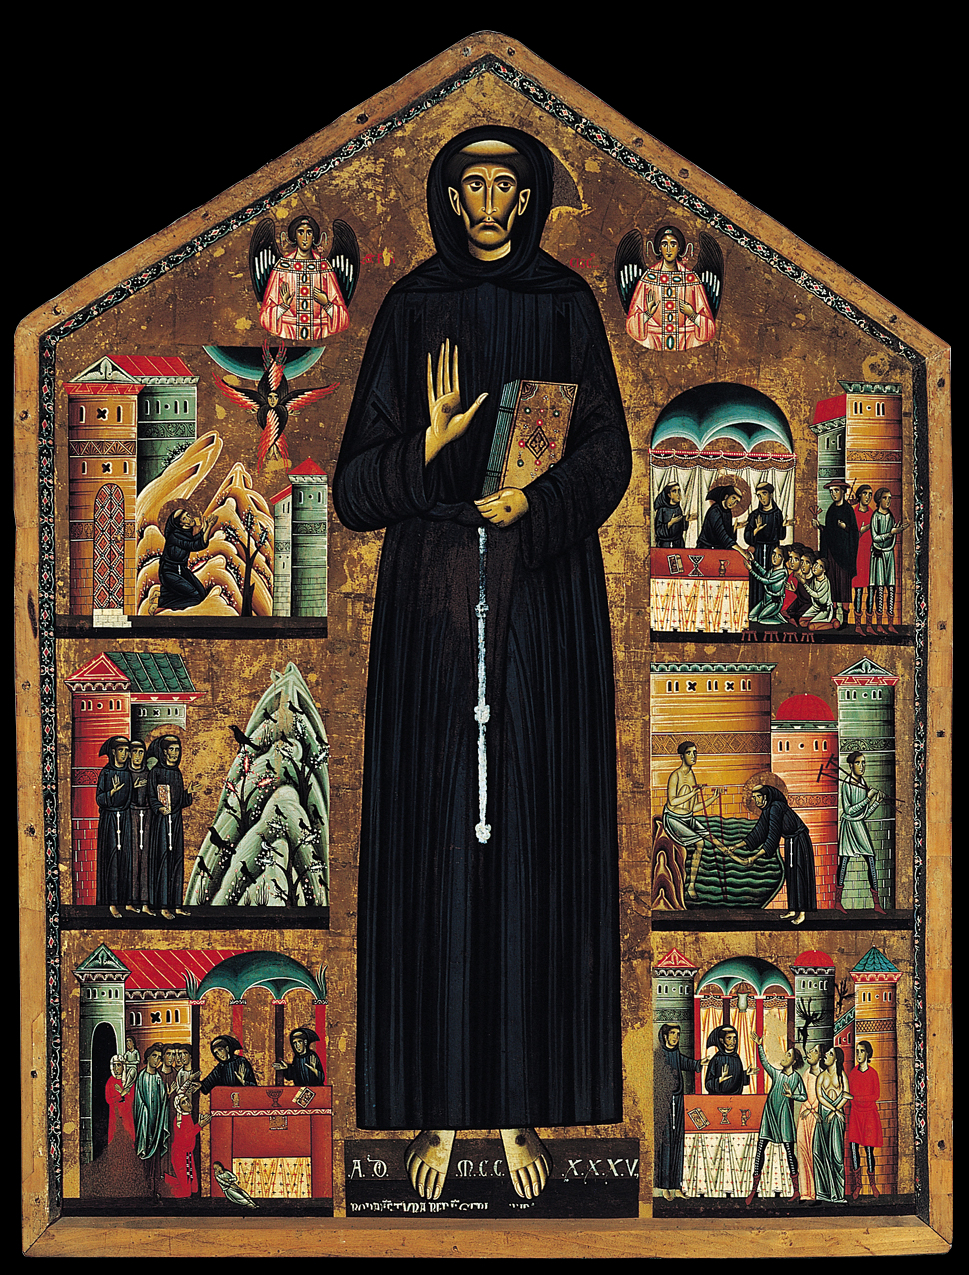 File:Francisco de Zurbaran Immaculate Conception 3.jpg - Wikimedia